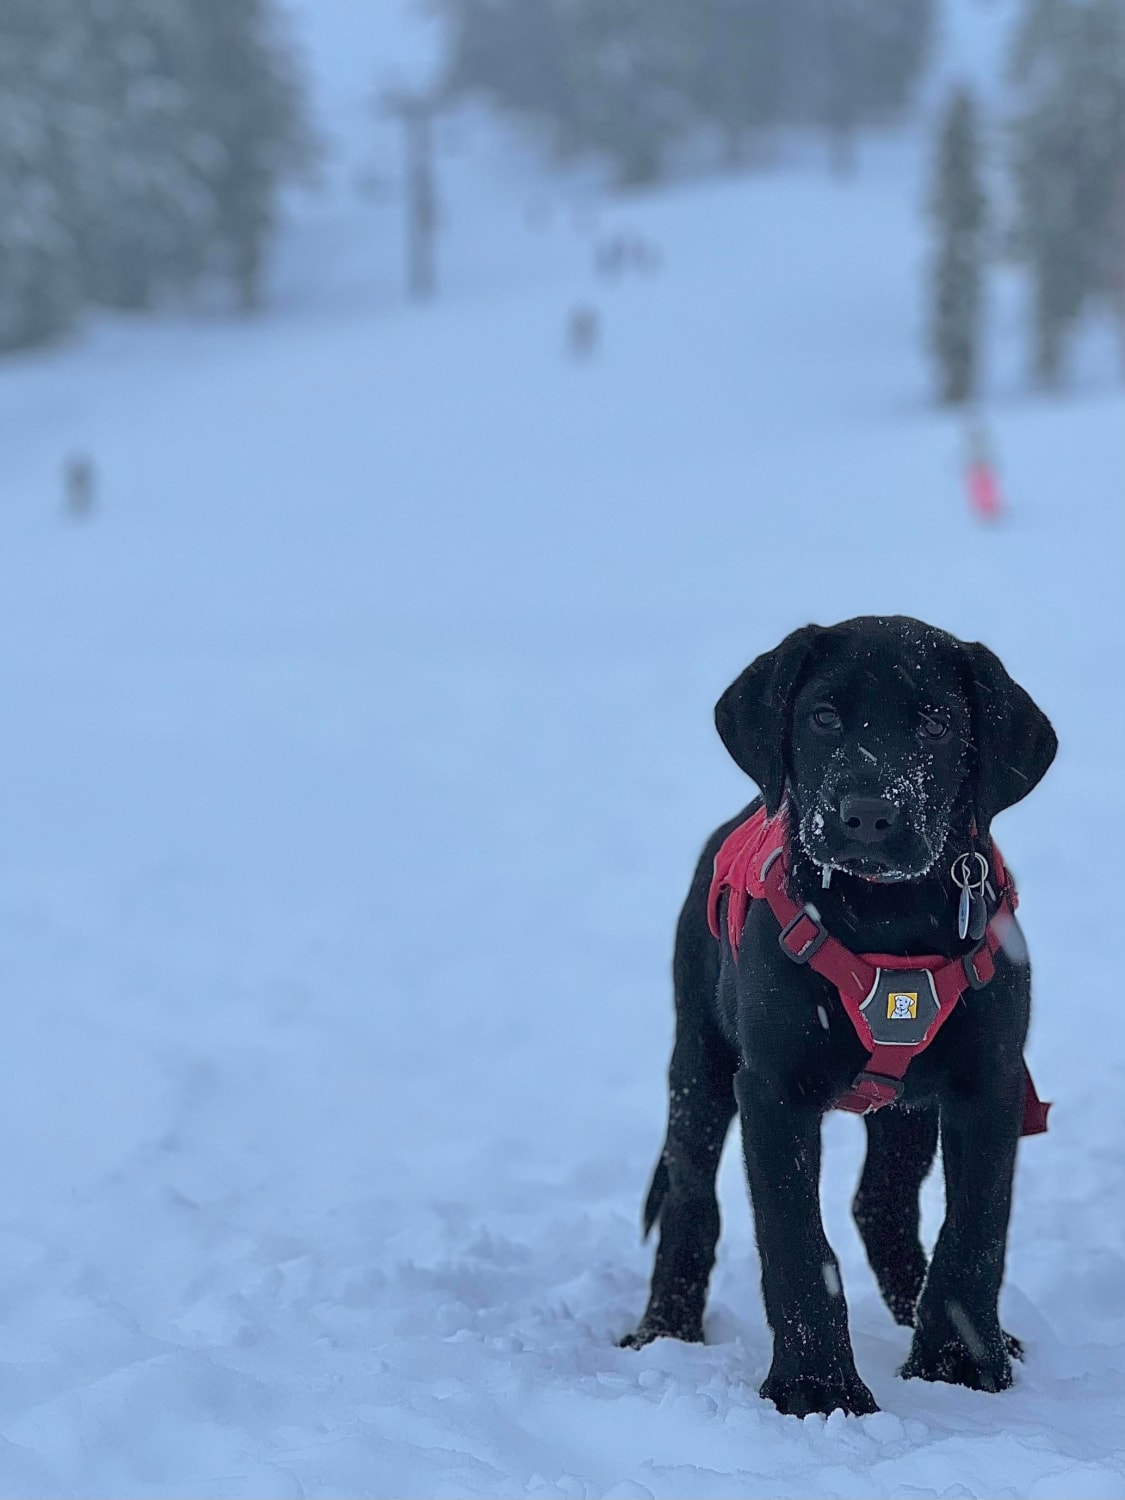 Moxie, the new avalanche puppy at Palisades Tahoe! @palisadesavalancedogs (IG)